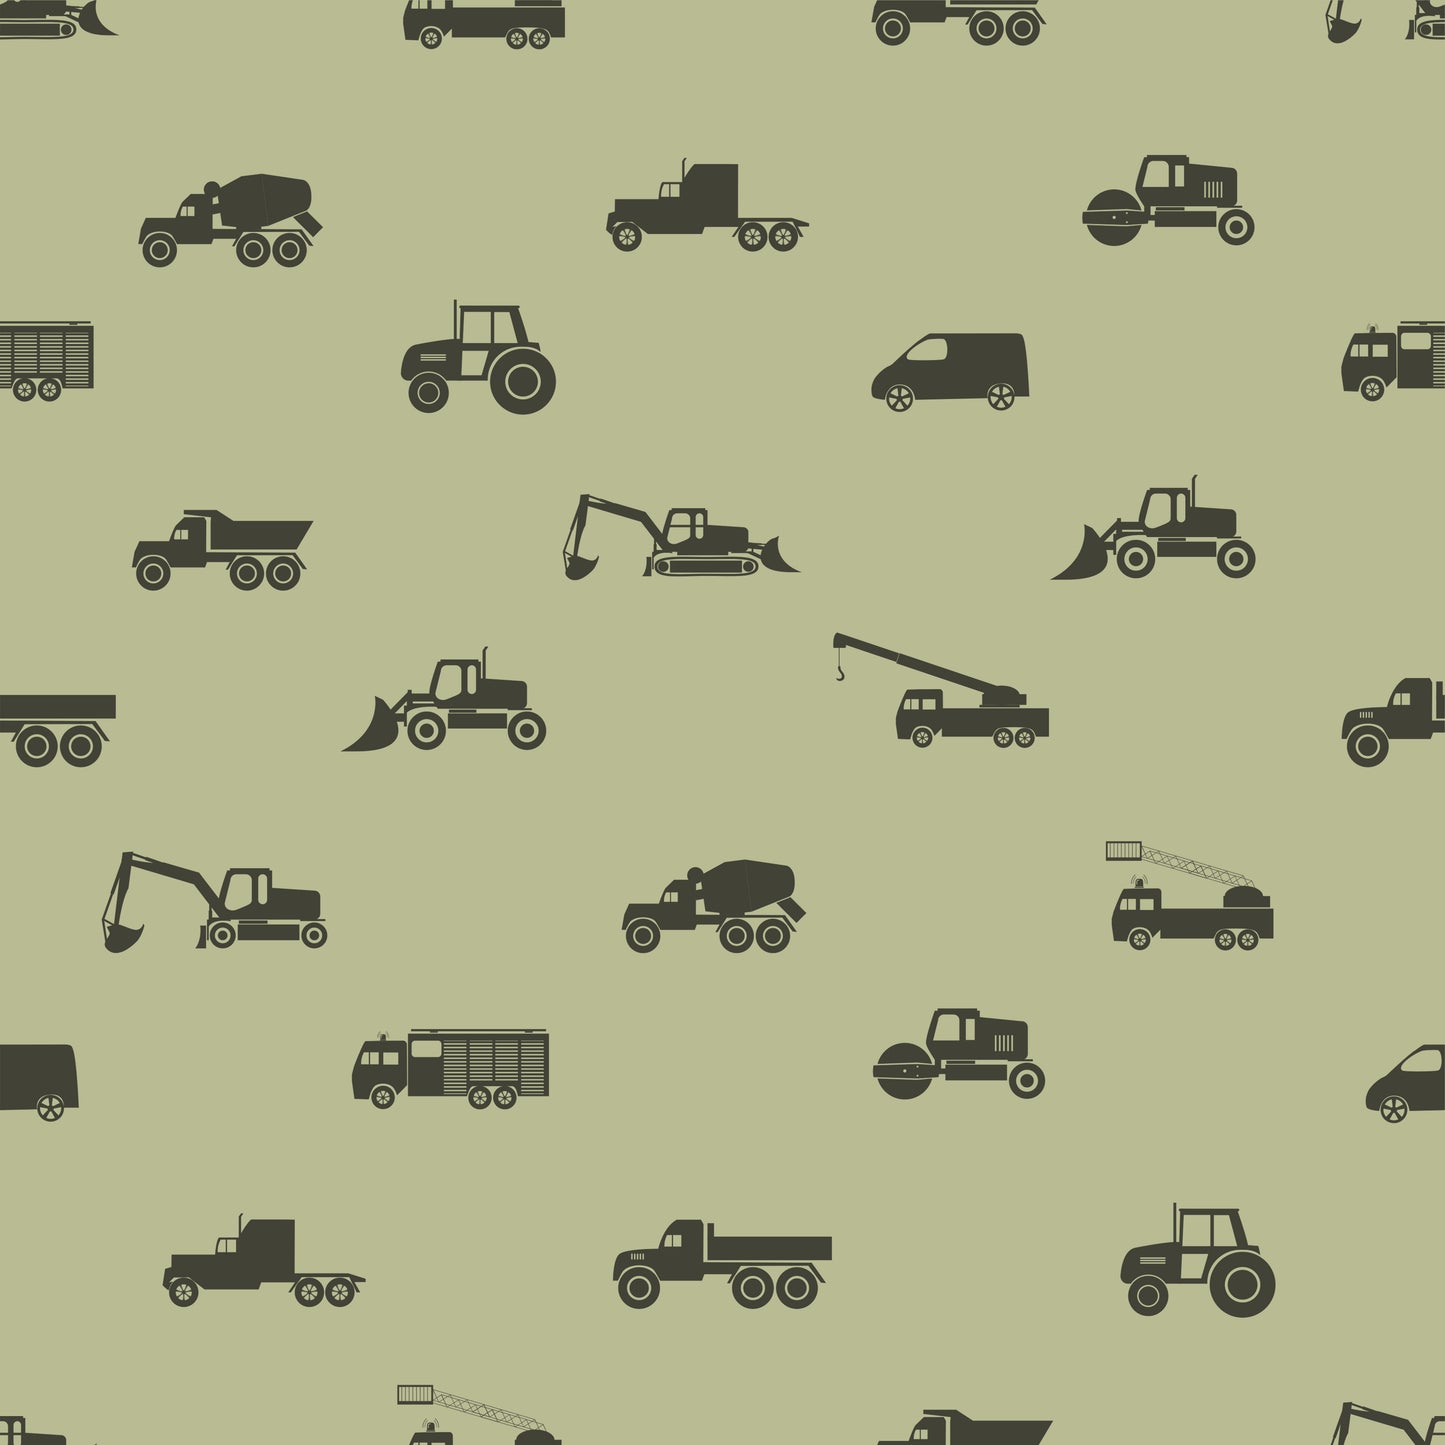 Tractor, car, truck, front end loader, firetruck wallpaper pattern up close